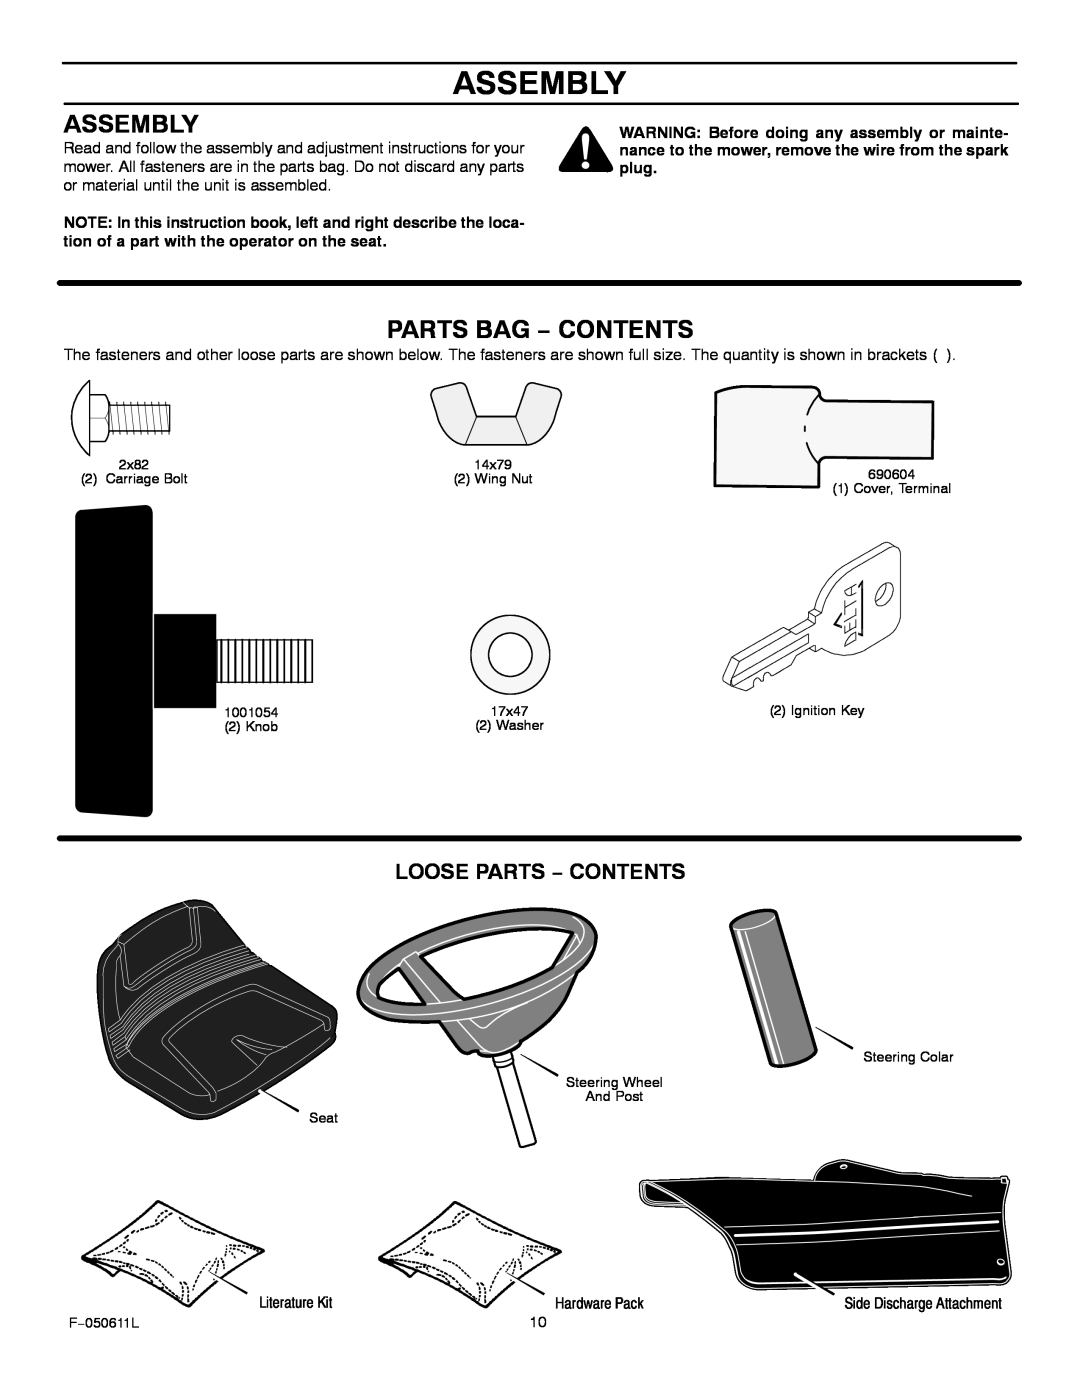 Murray 309007x8B manual Assembly, Parts Bag − Contents, Loose Parts − Contents 